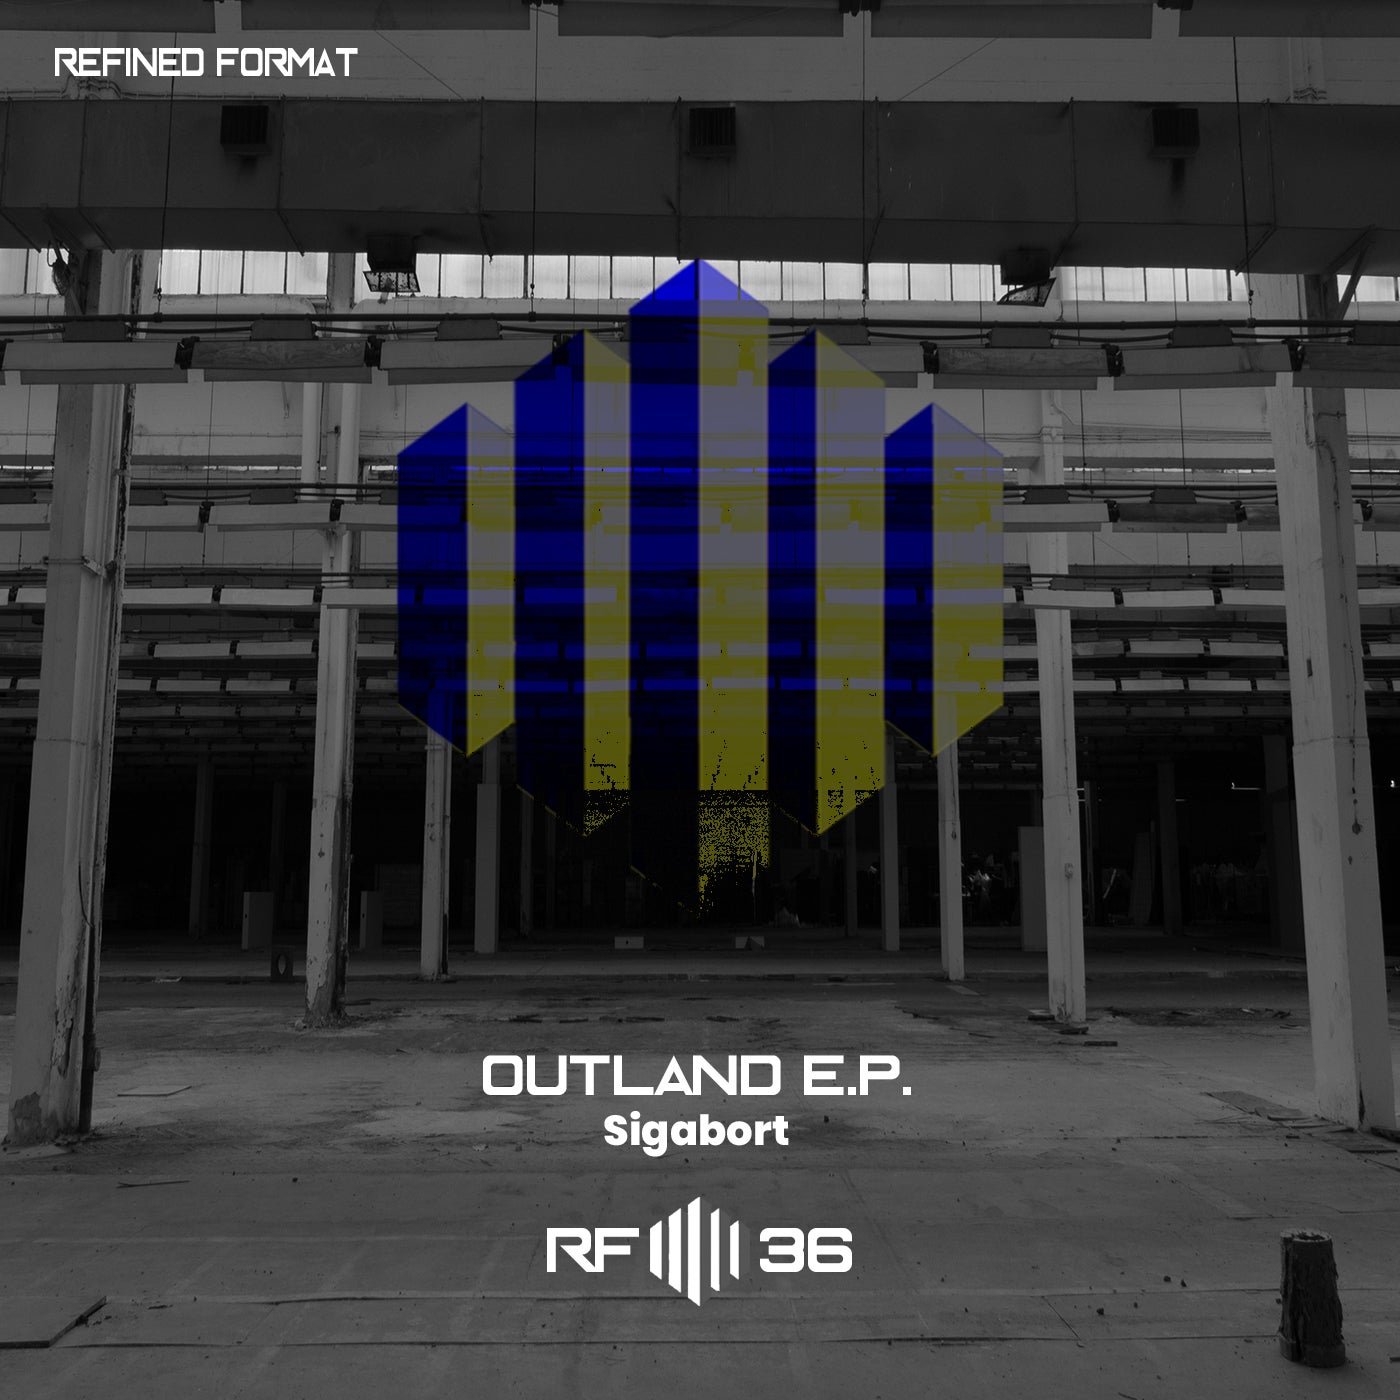 Outland E.P.